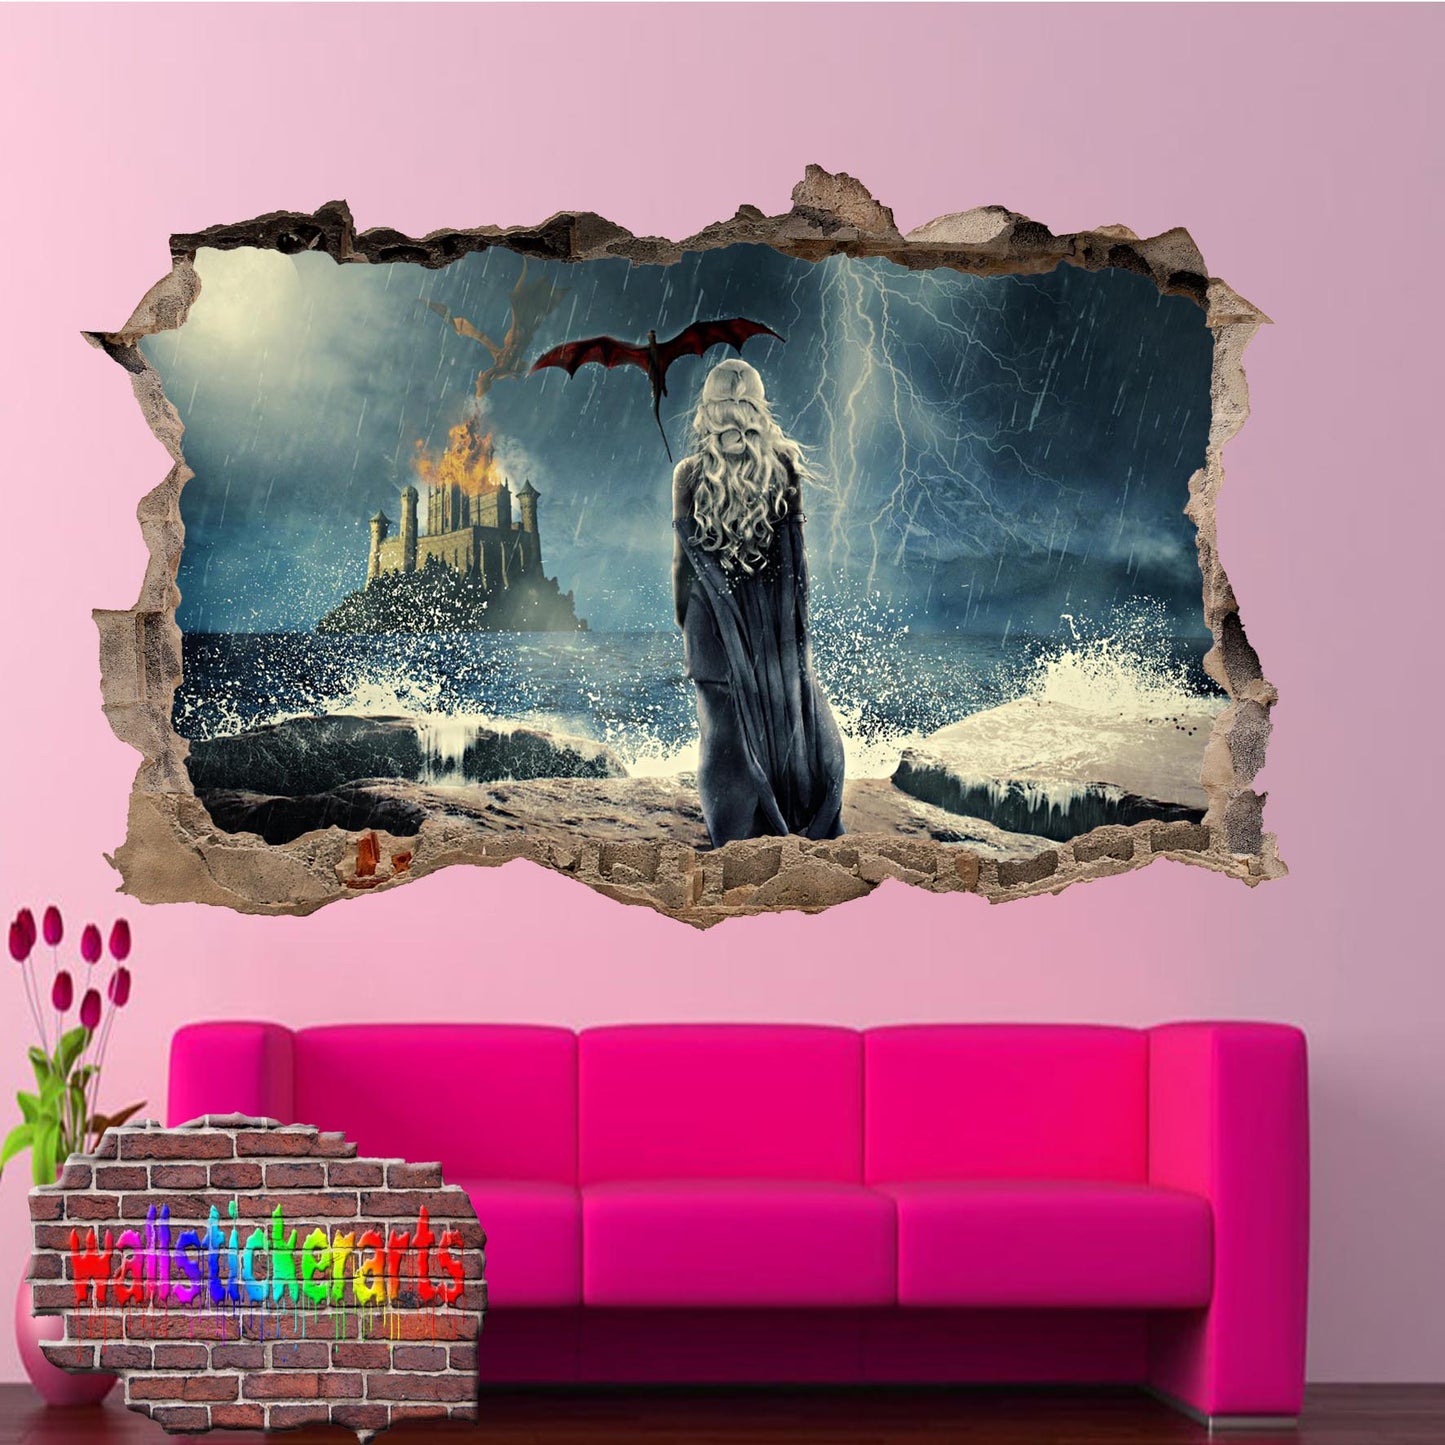 Daenerys Khaleesi Game of Thrones Character Wall Sticker 3d Art Poster Room Office Home Decor Decal Mural AA7